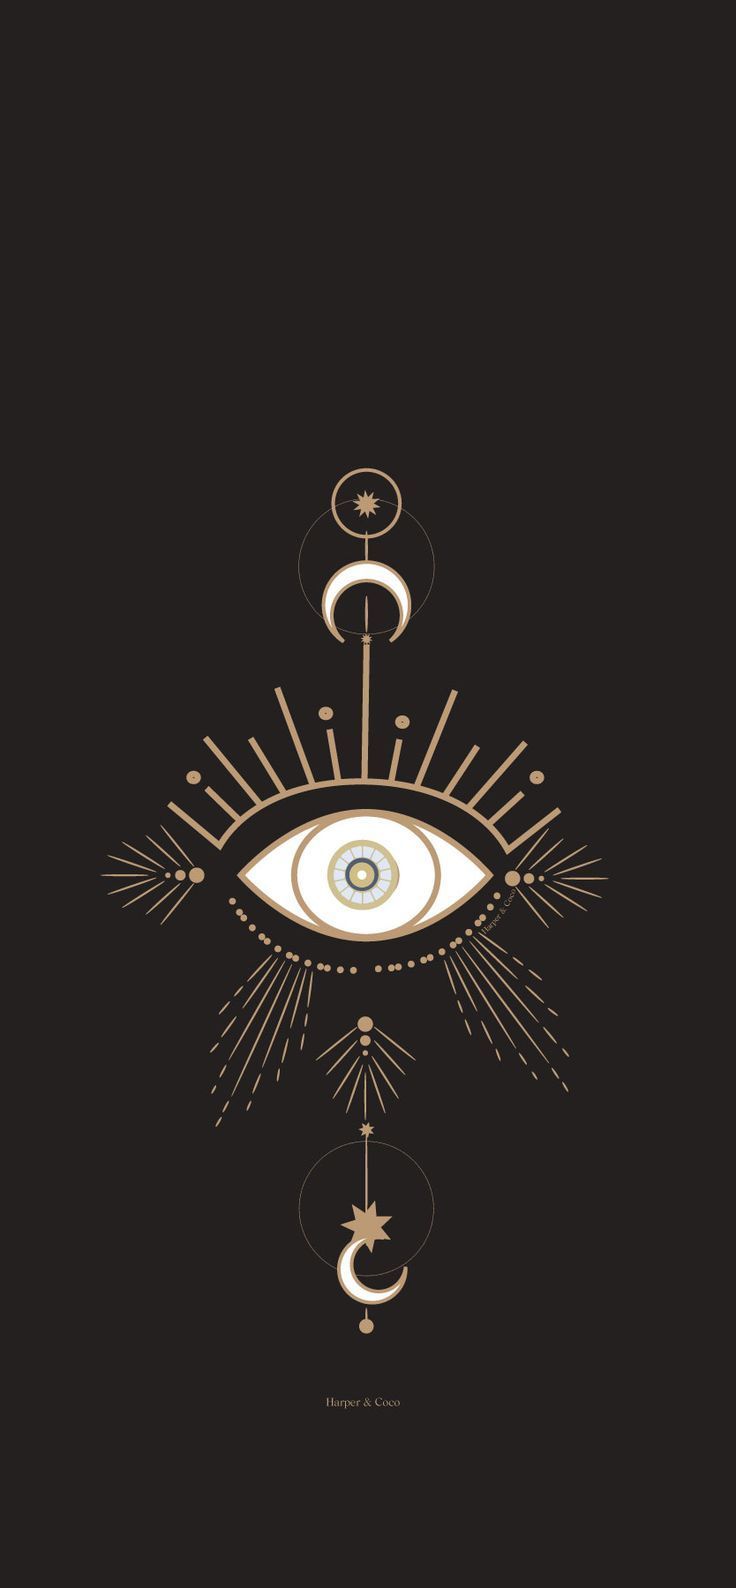 The all seeing eye of horus - Eyes